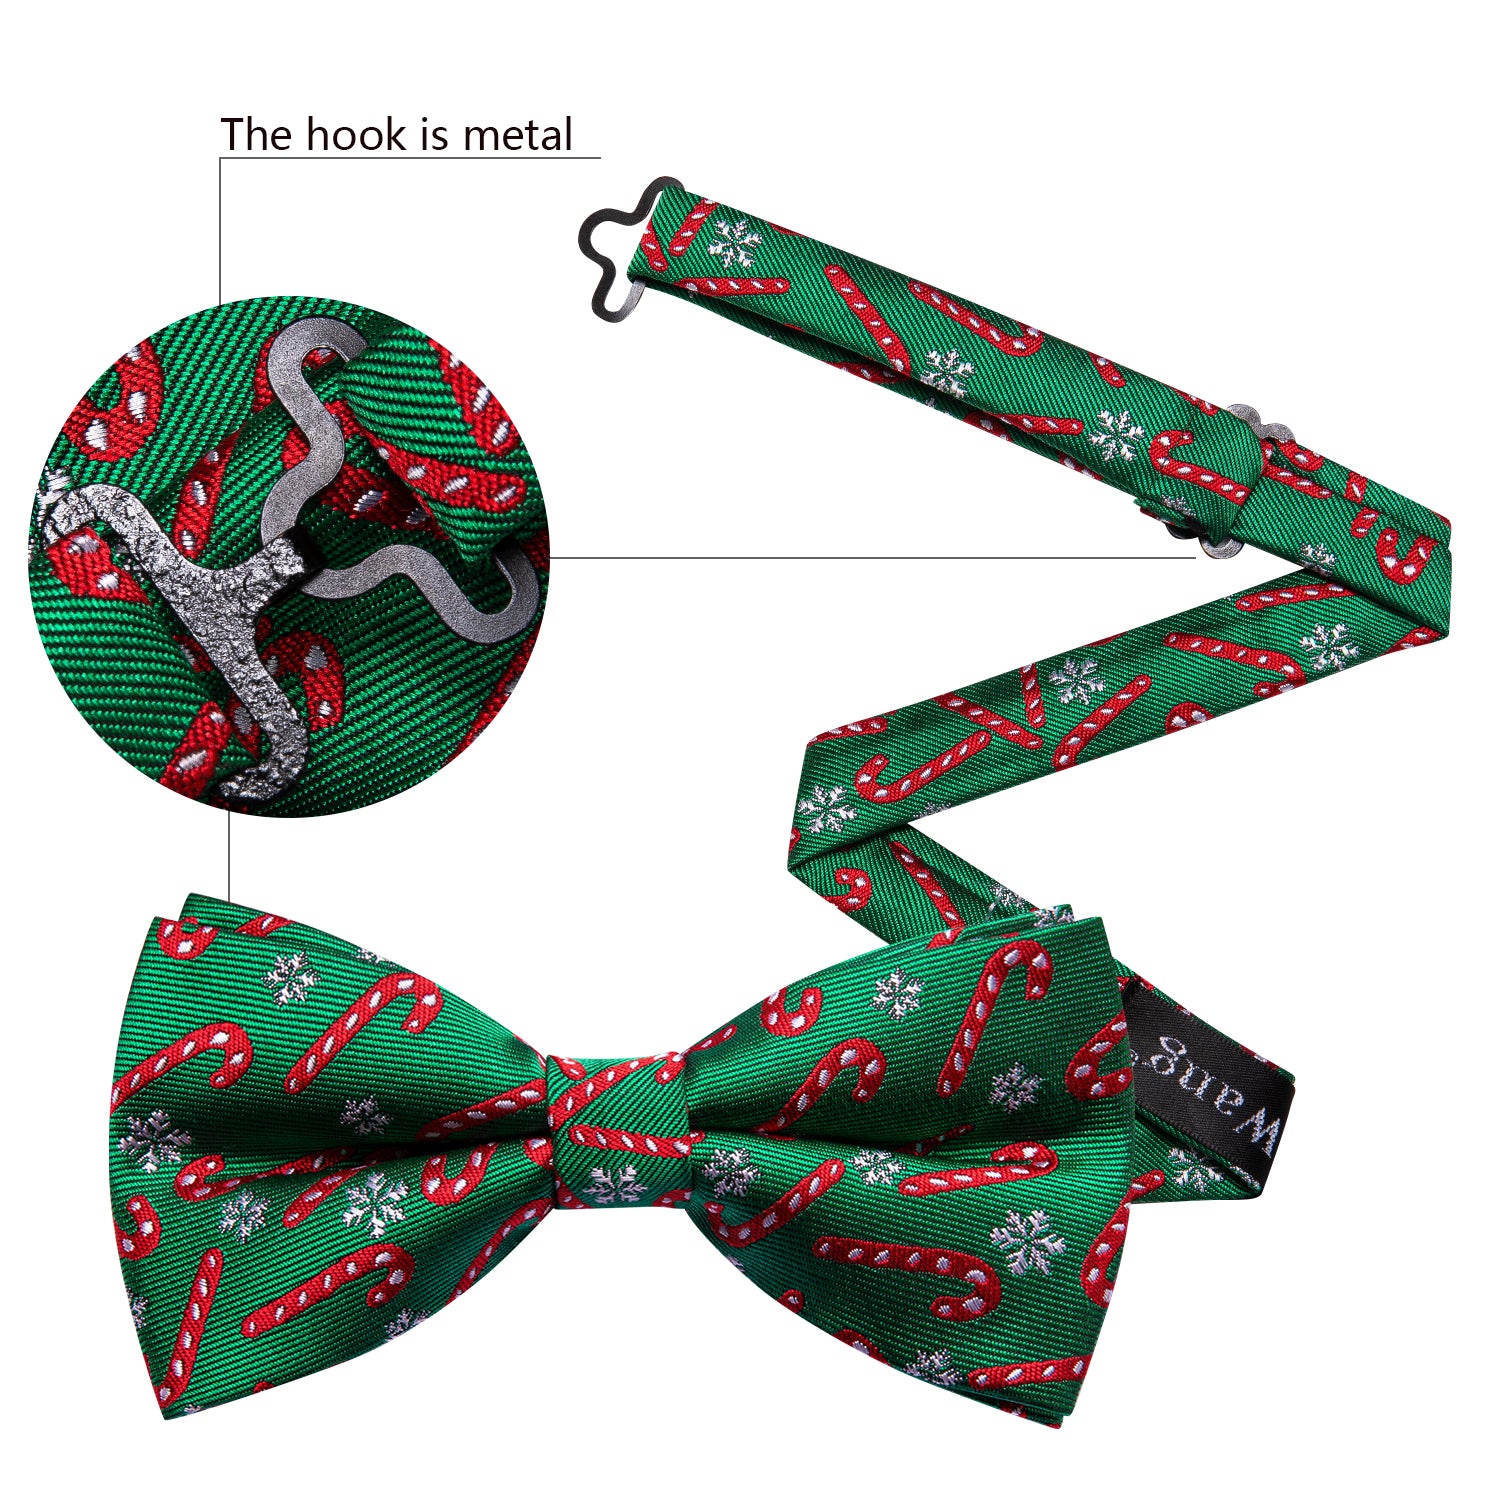 Christmas Green Red Xmas Crutch Silk Bow Tie Hanky Cufflinks Set